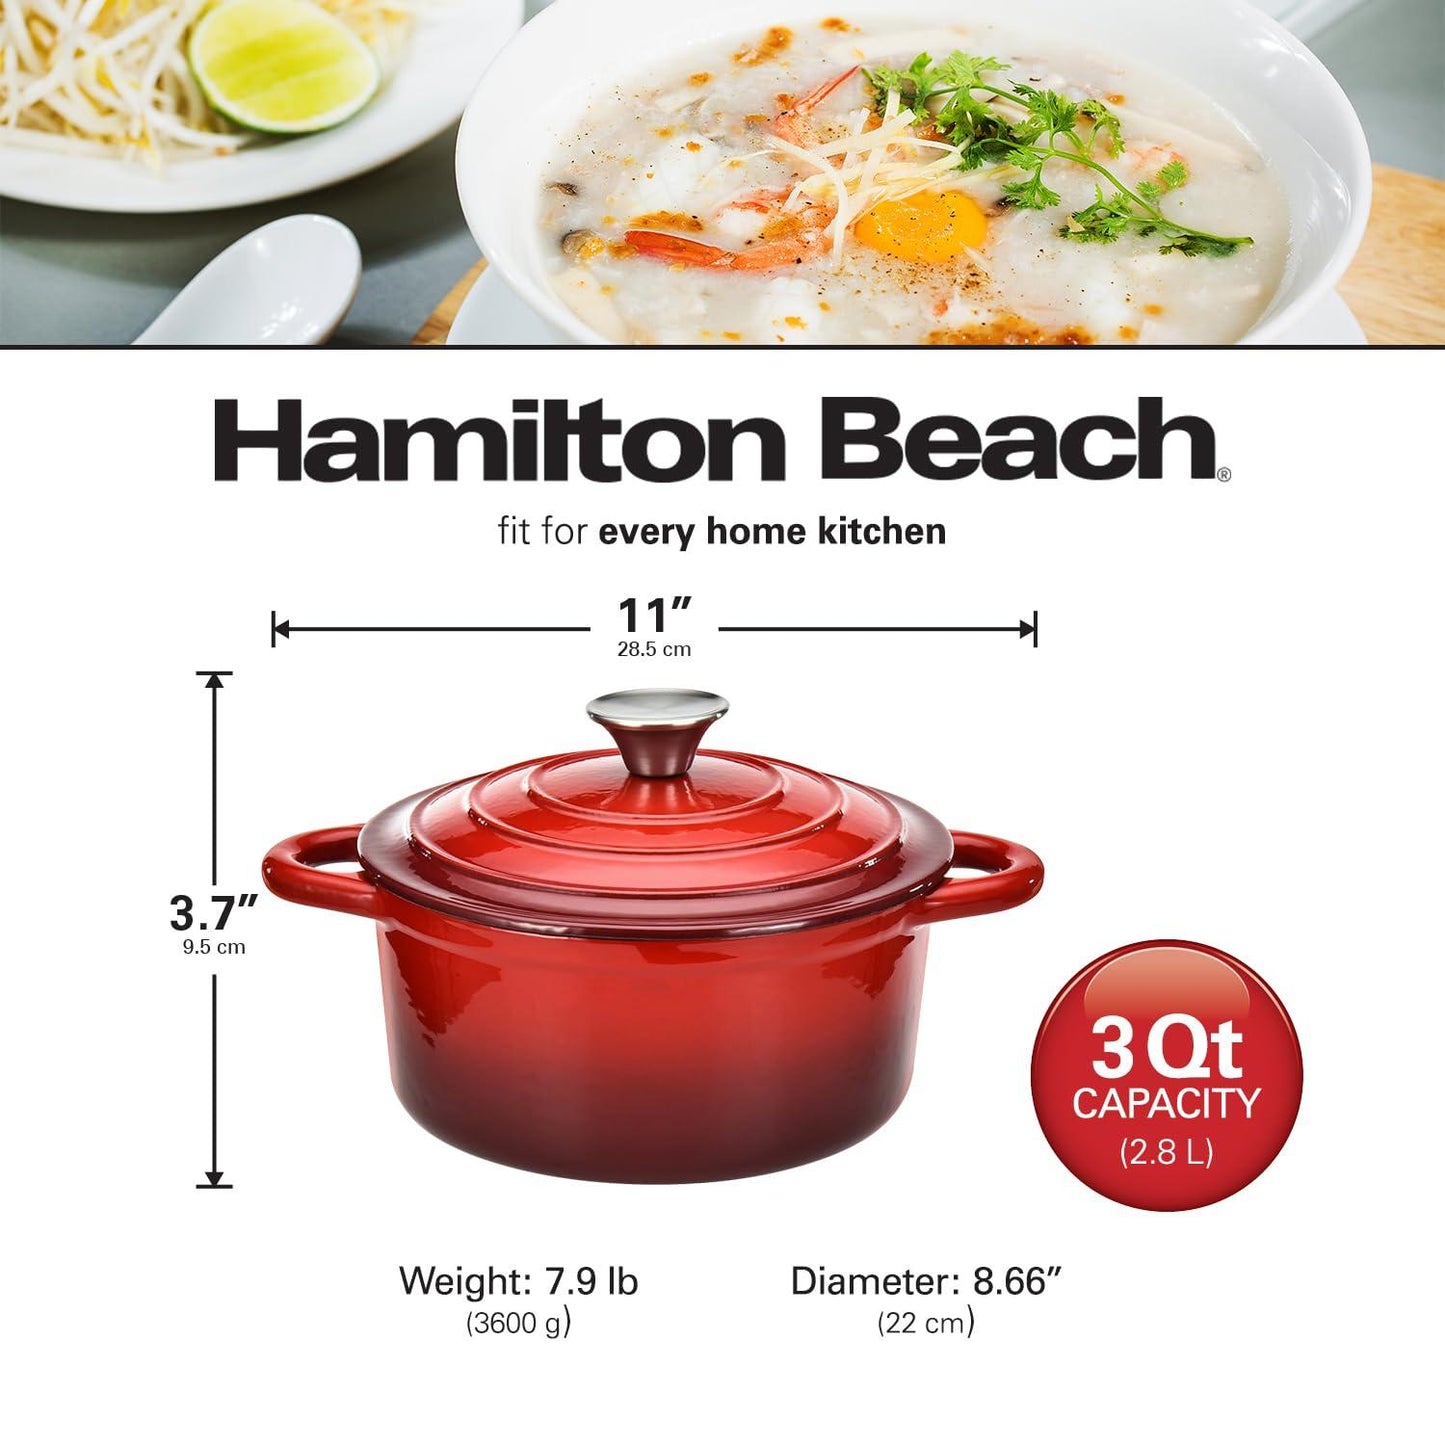 Hamilton Beach Enameled Cast Iron Dutch Oven Red (3-Quart) | Cream Enamel Coating Dutch Oven Pot with Lid | Cast Iron Dutch Oven with Even Heat Distribution | Easy Grip to Handles & Multipurpose - CookCave